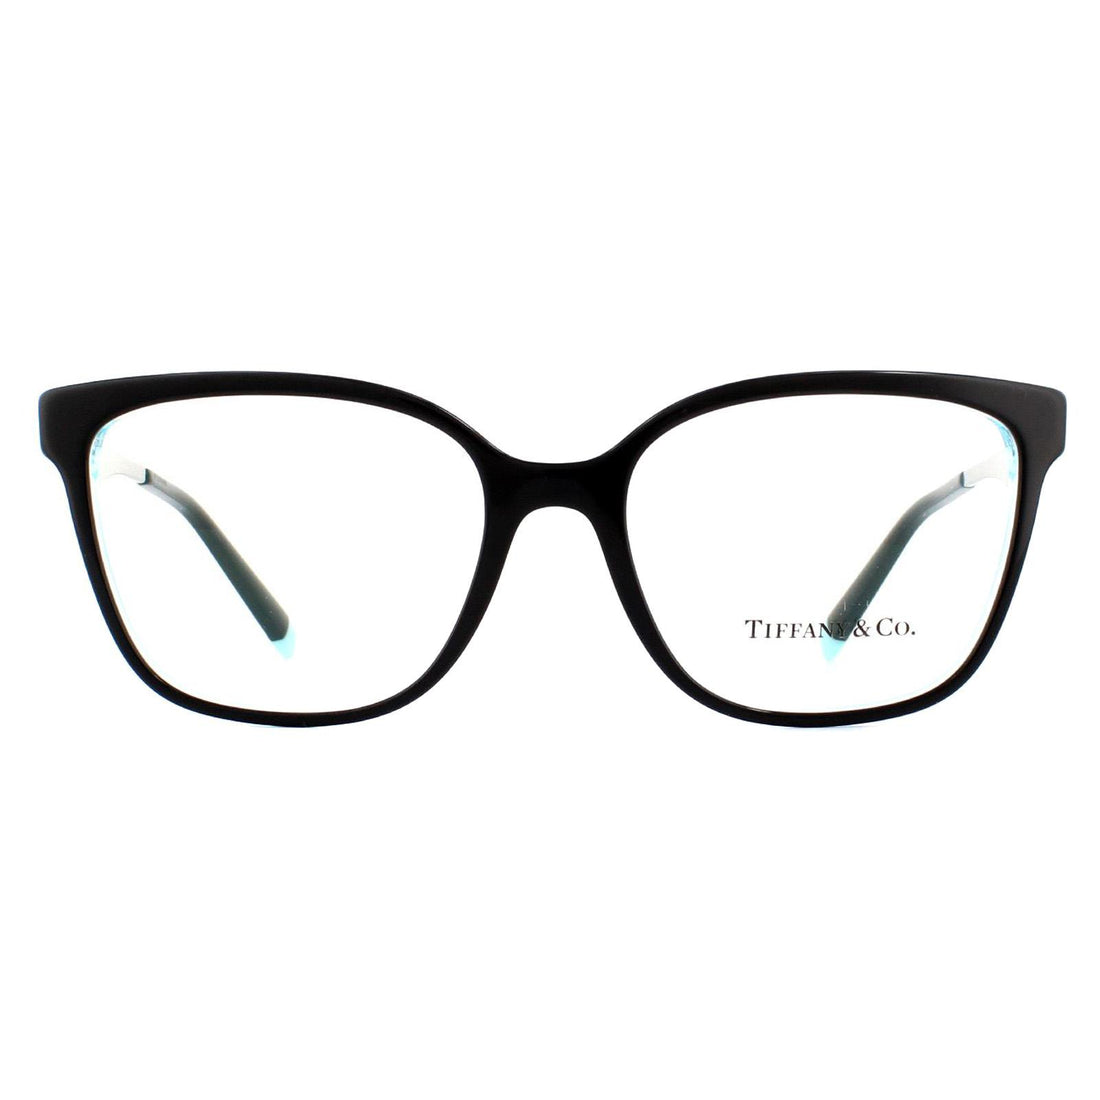 Tiffany 2189 Glasses Frames Black White Blue